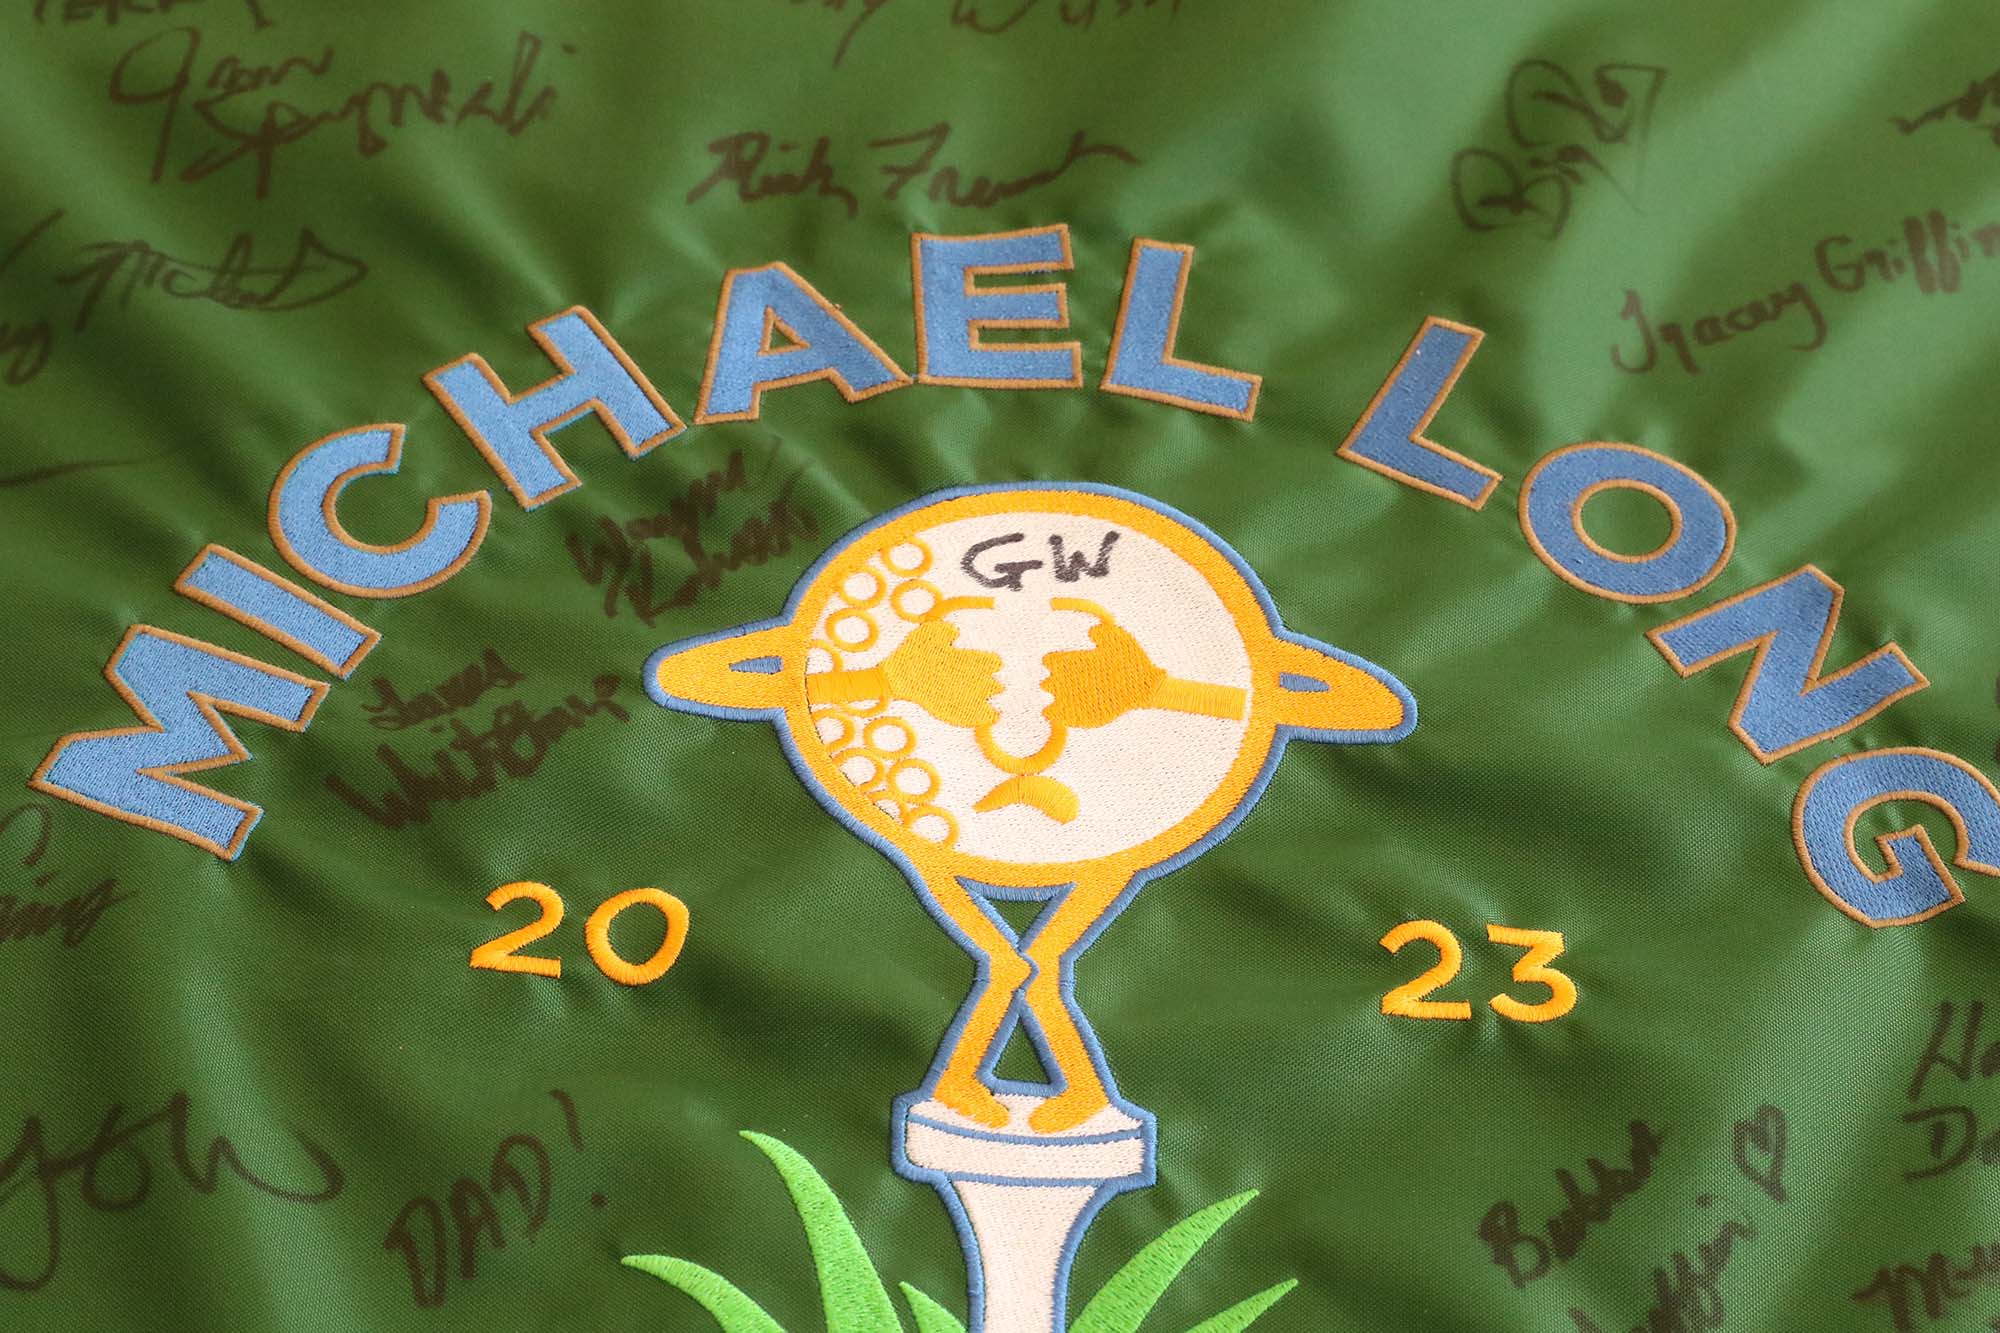 The 27th Annual Michael Todd Long Golf Tournament Flag